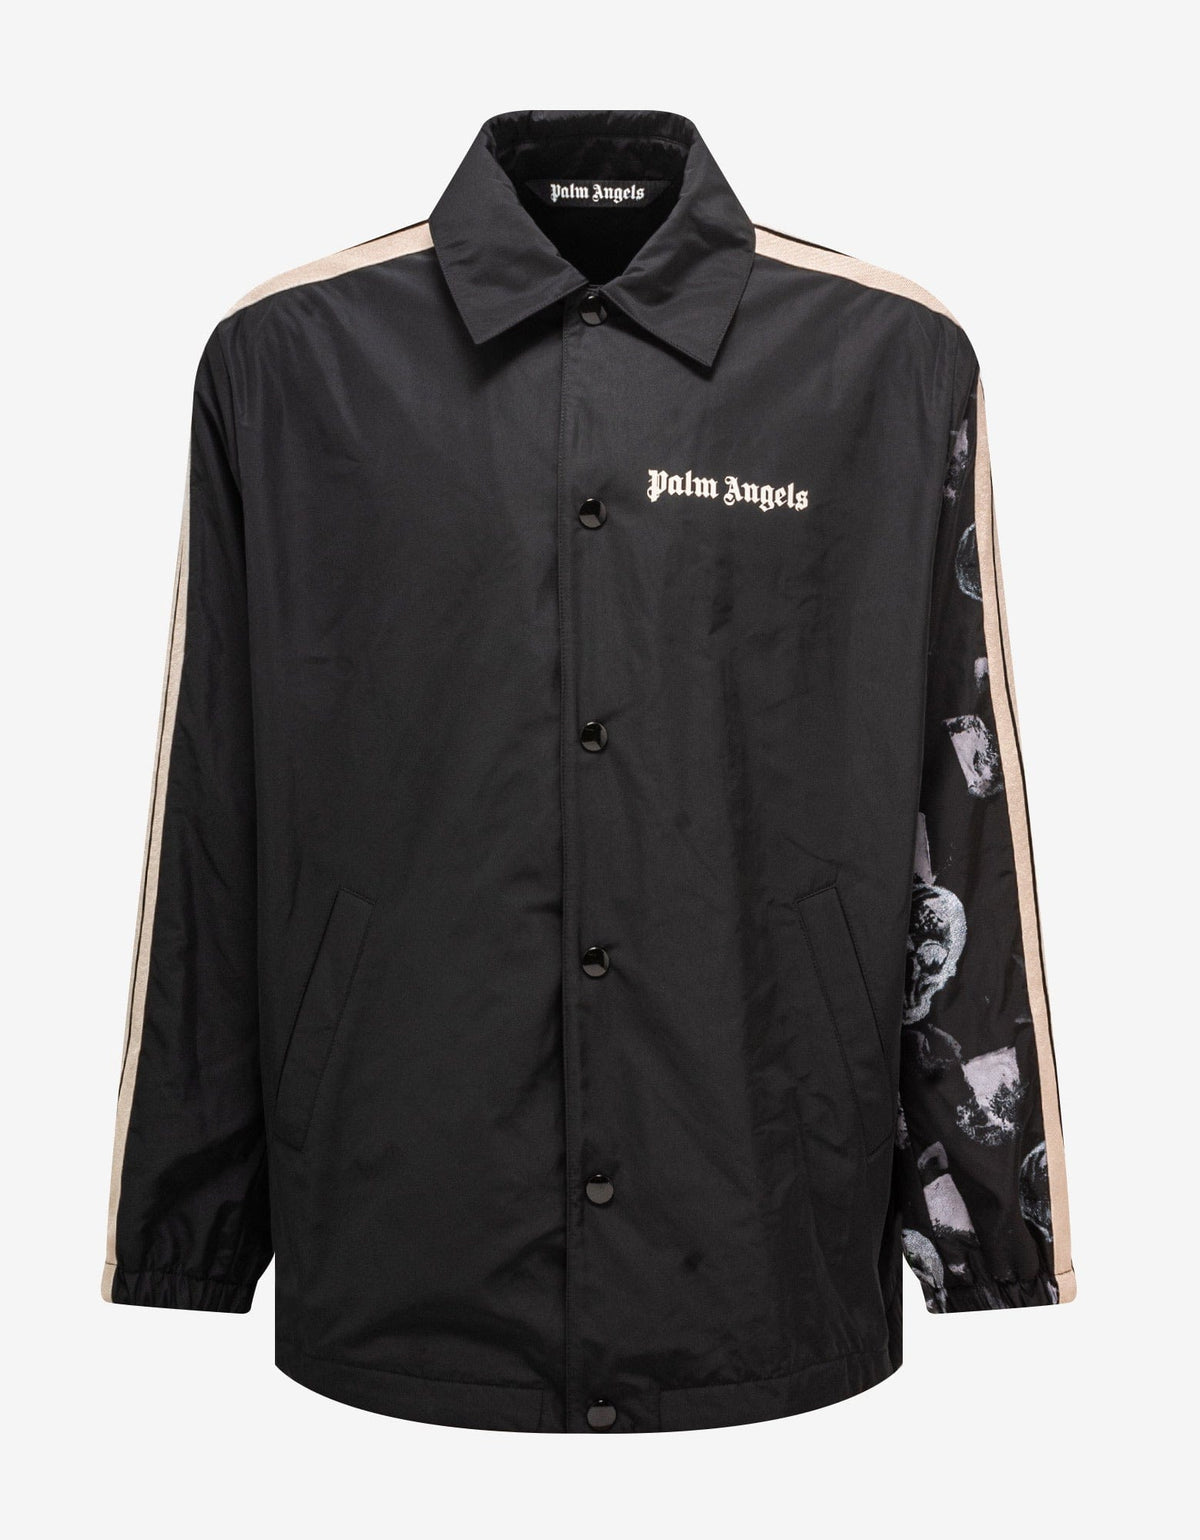 Palm Angels Black Sleeve Print Coach Jacket